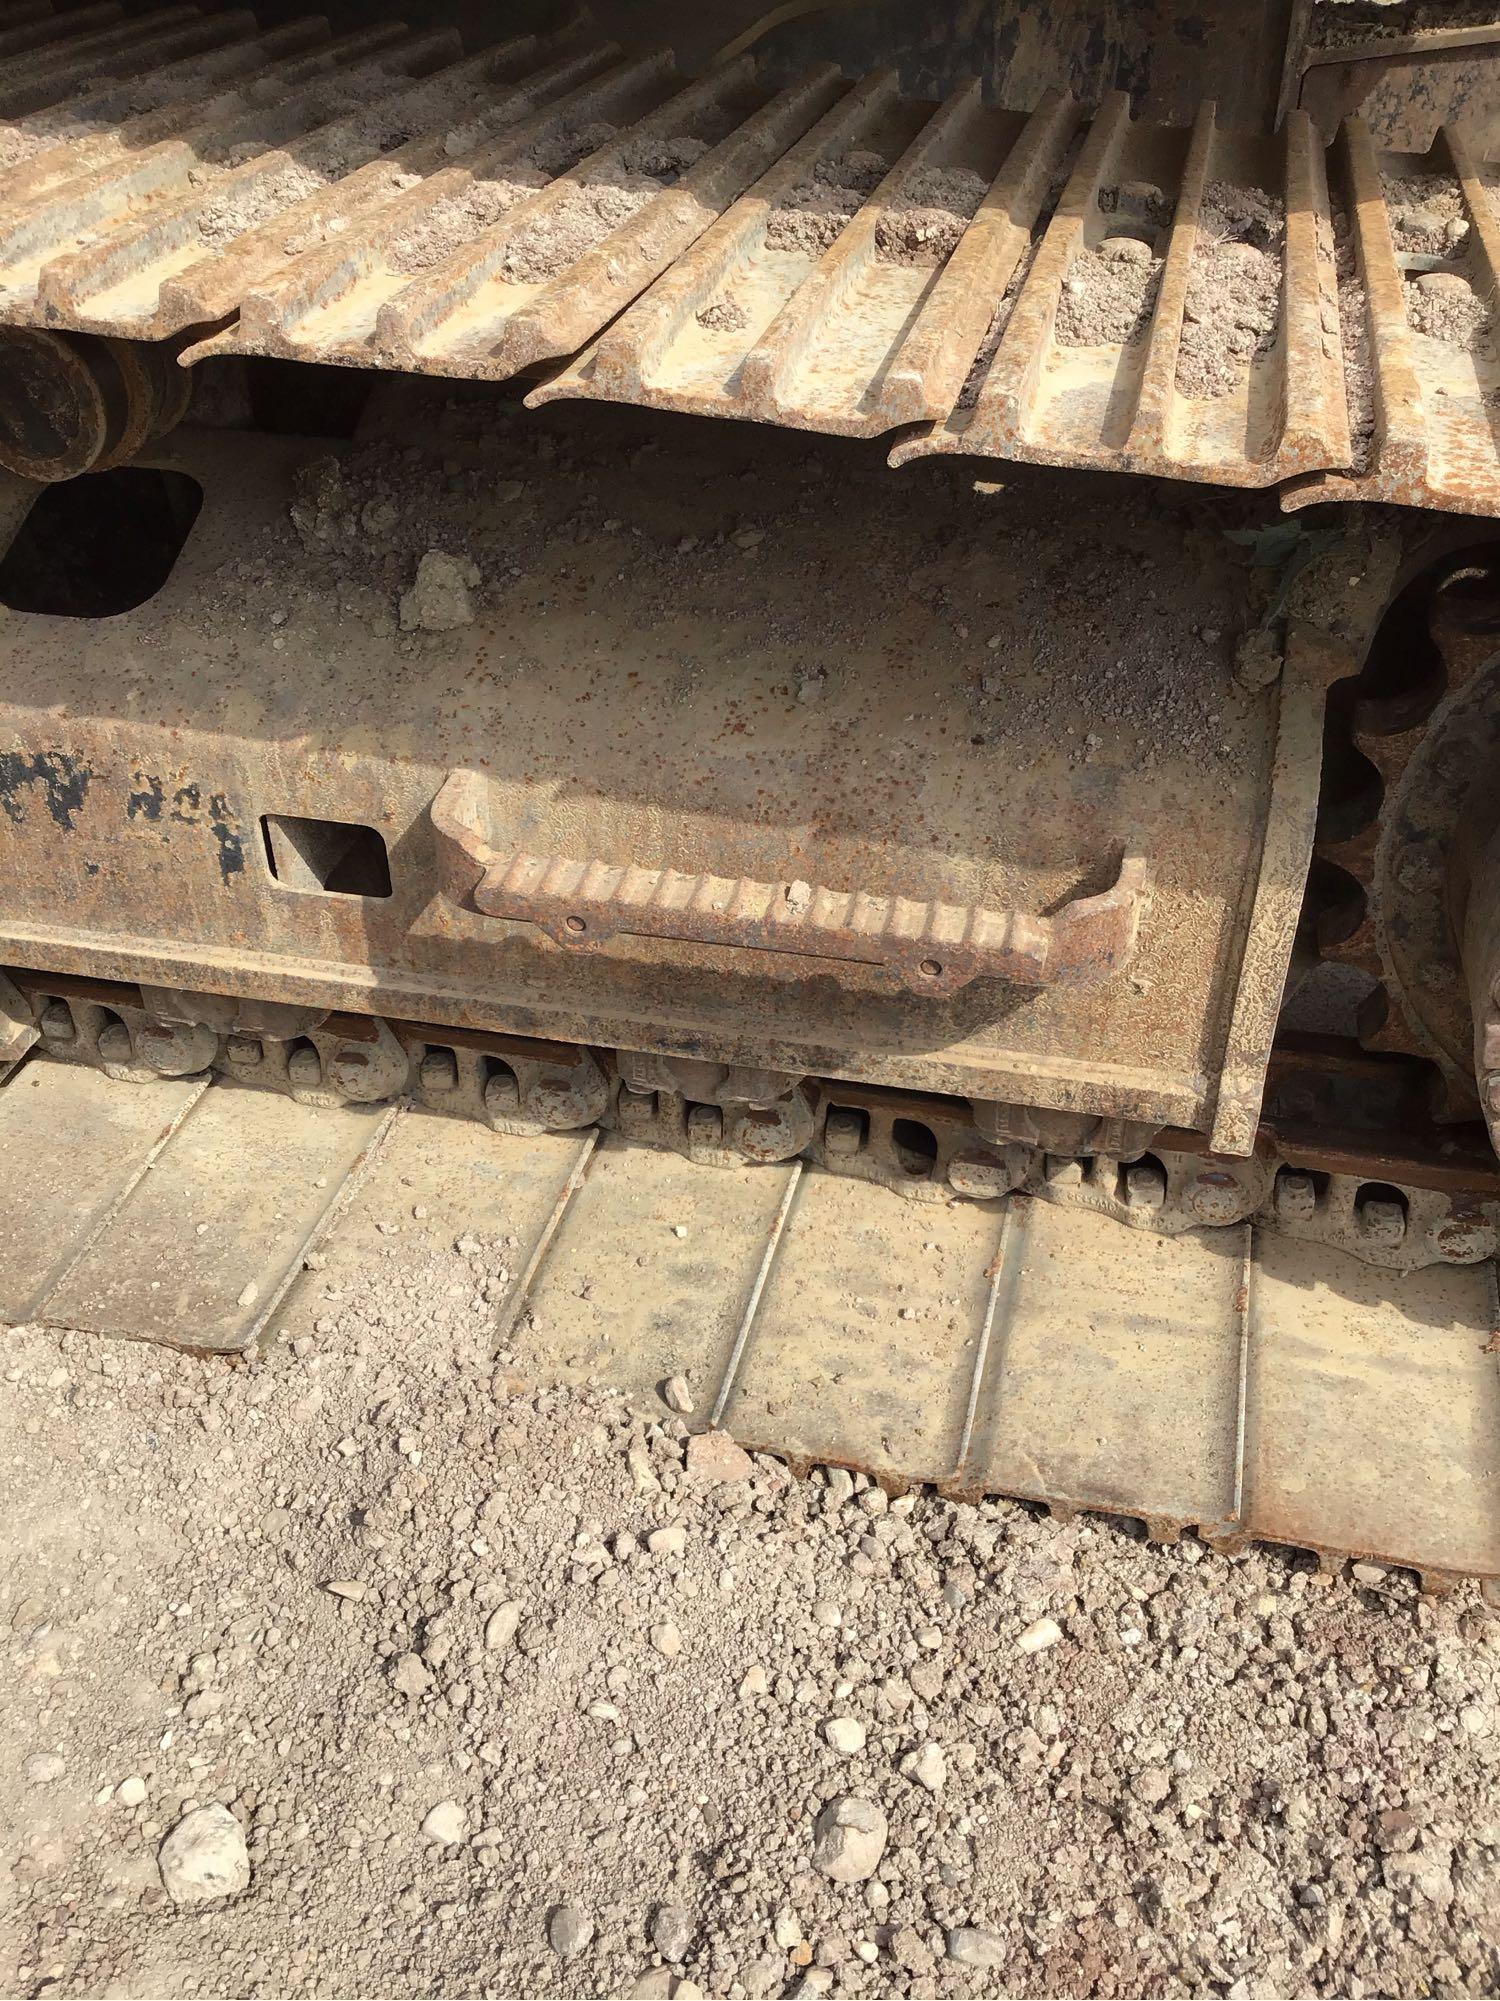 320 E LRR Caterpillar Excavator, Srl# TFX00455